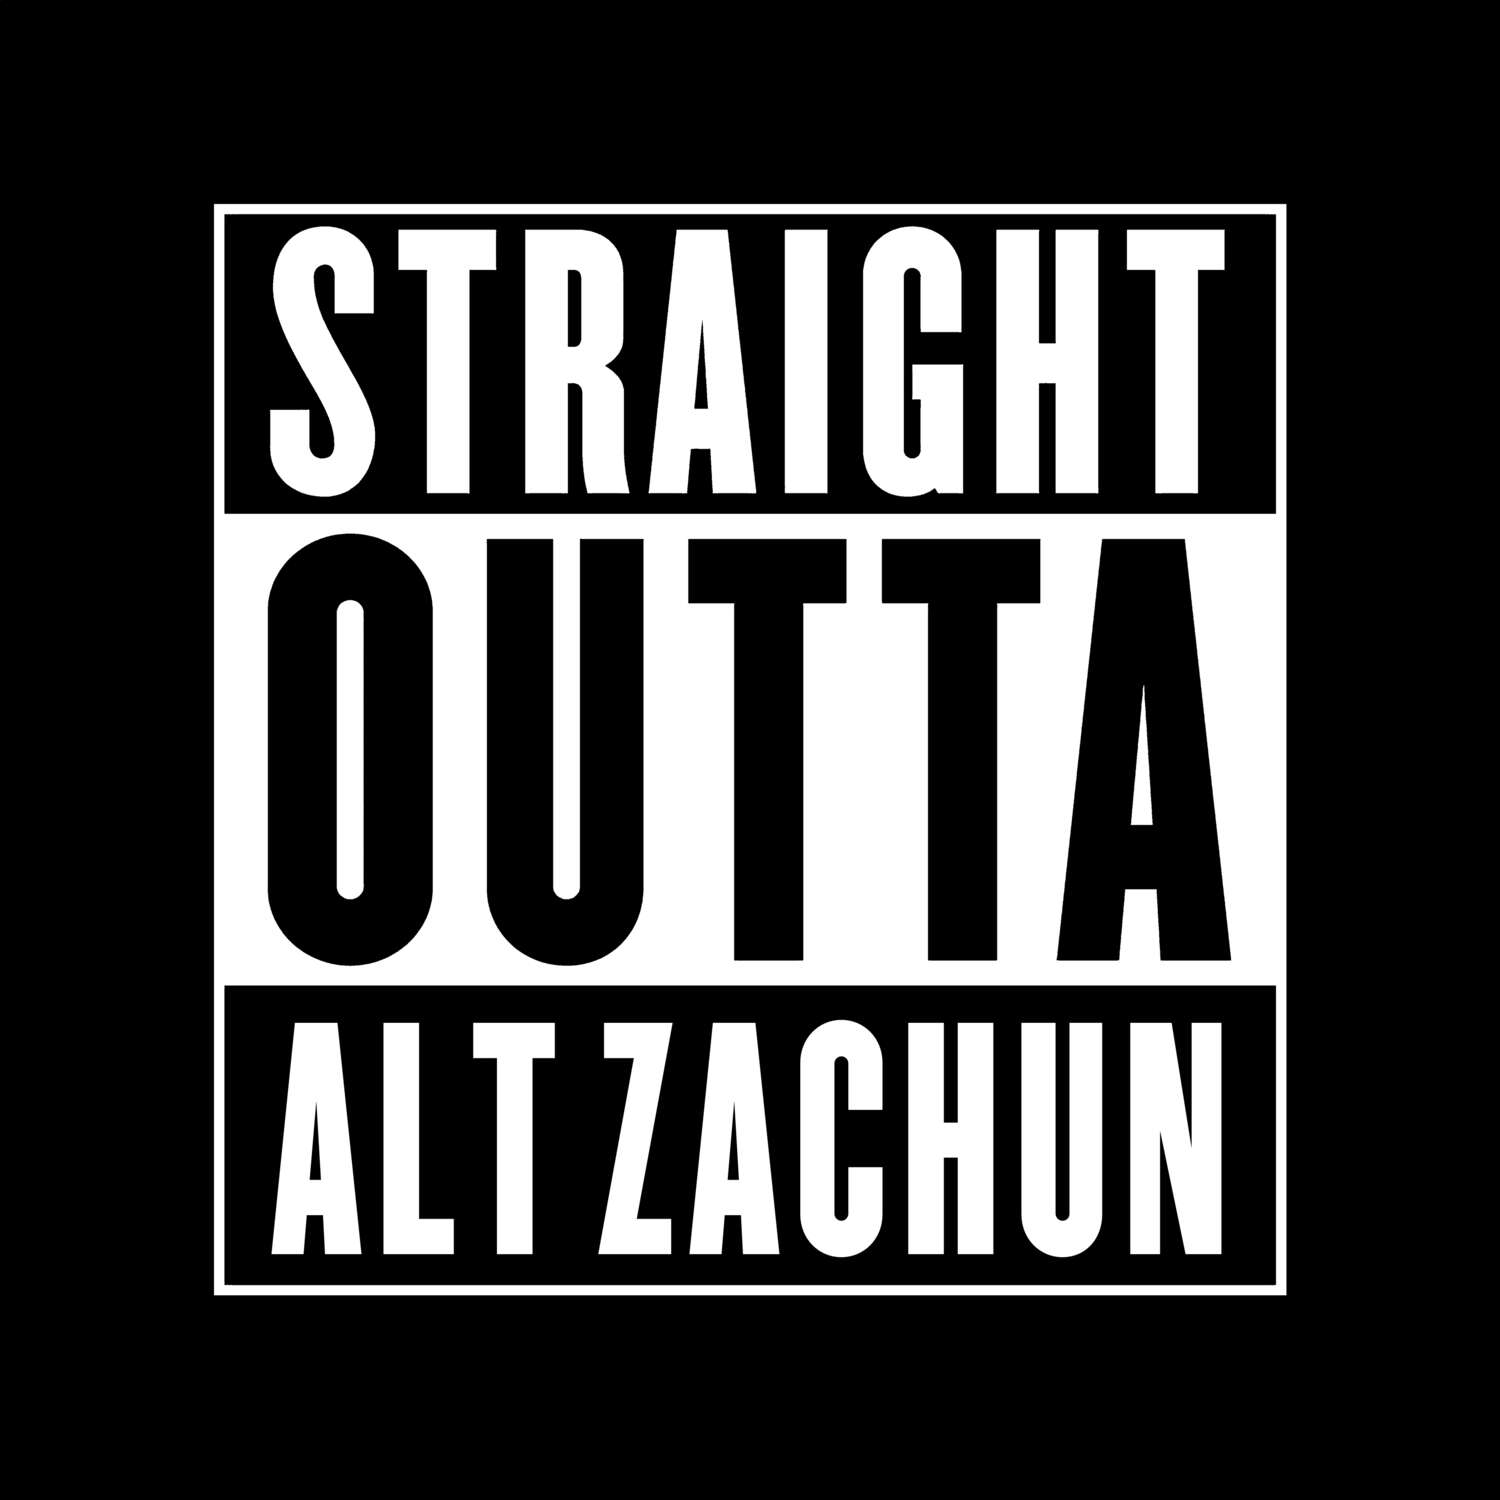 Alt Zachun T-Shirt »Straight Outta«